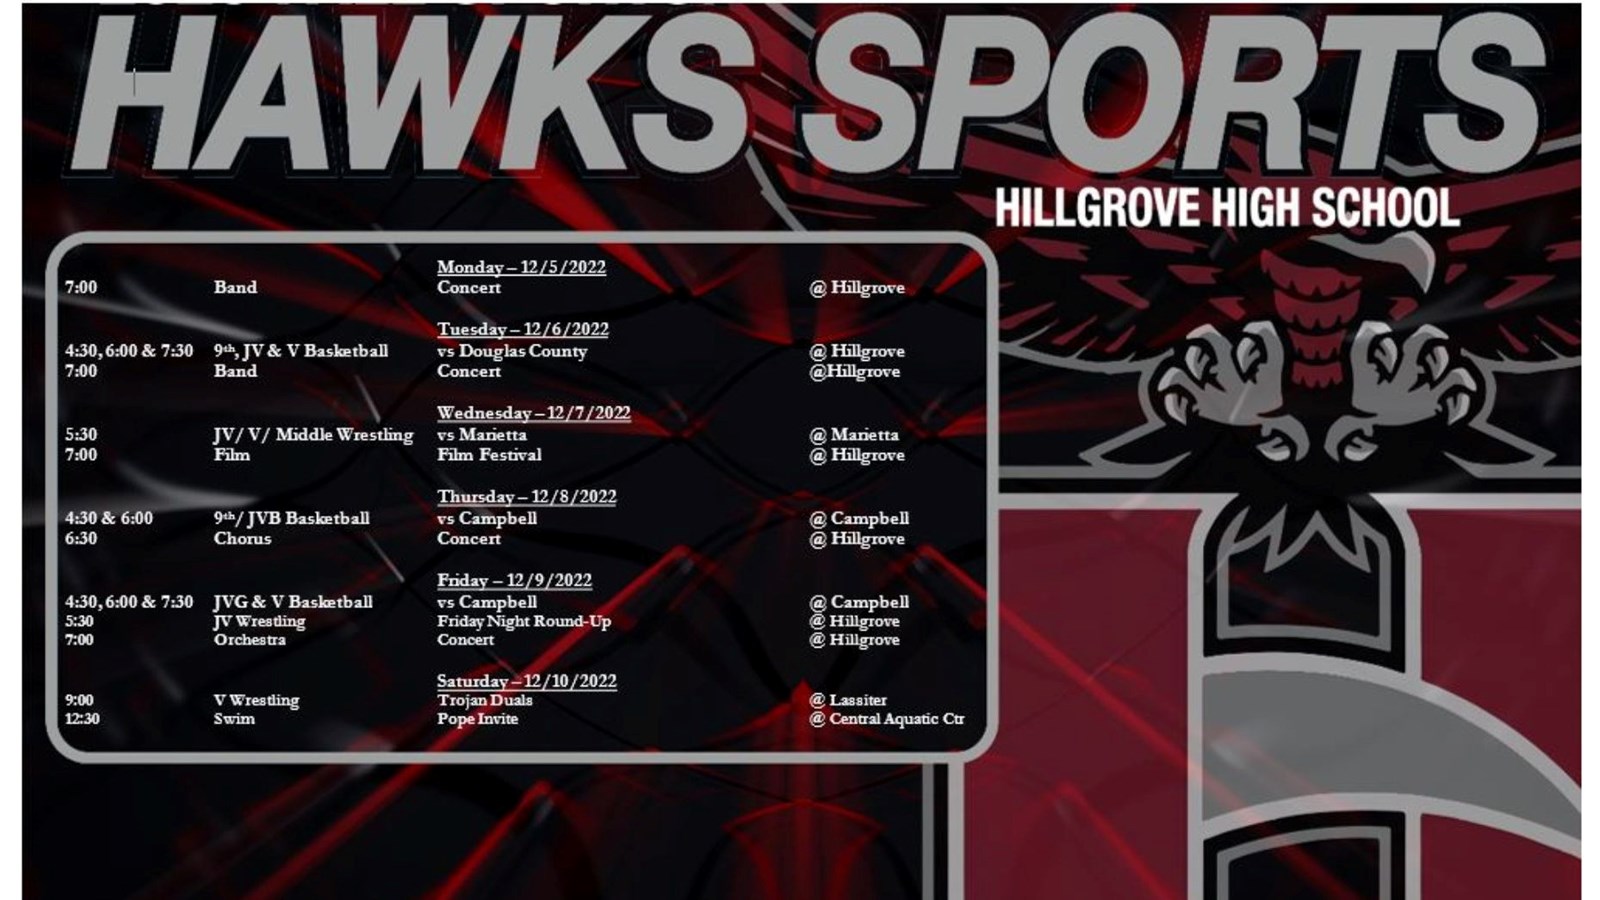 Hawks Sports week of December 5, 2022